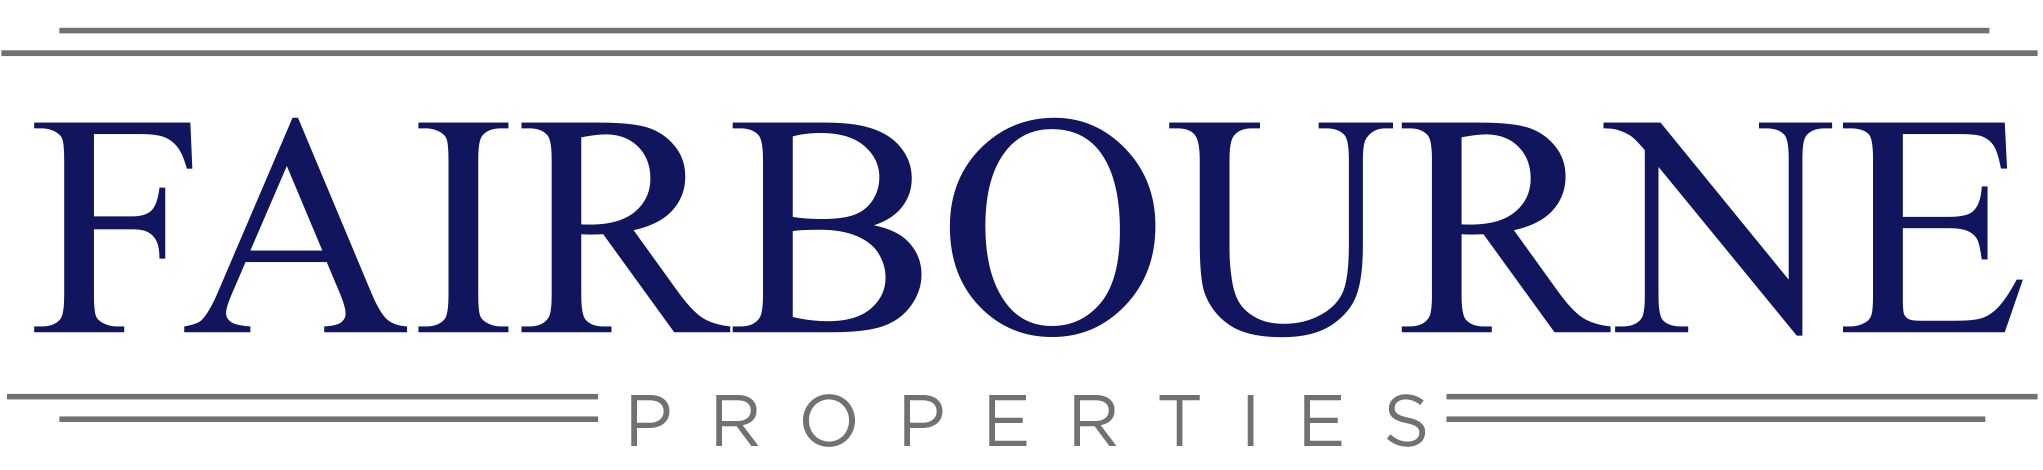 fairbourne properties logo